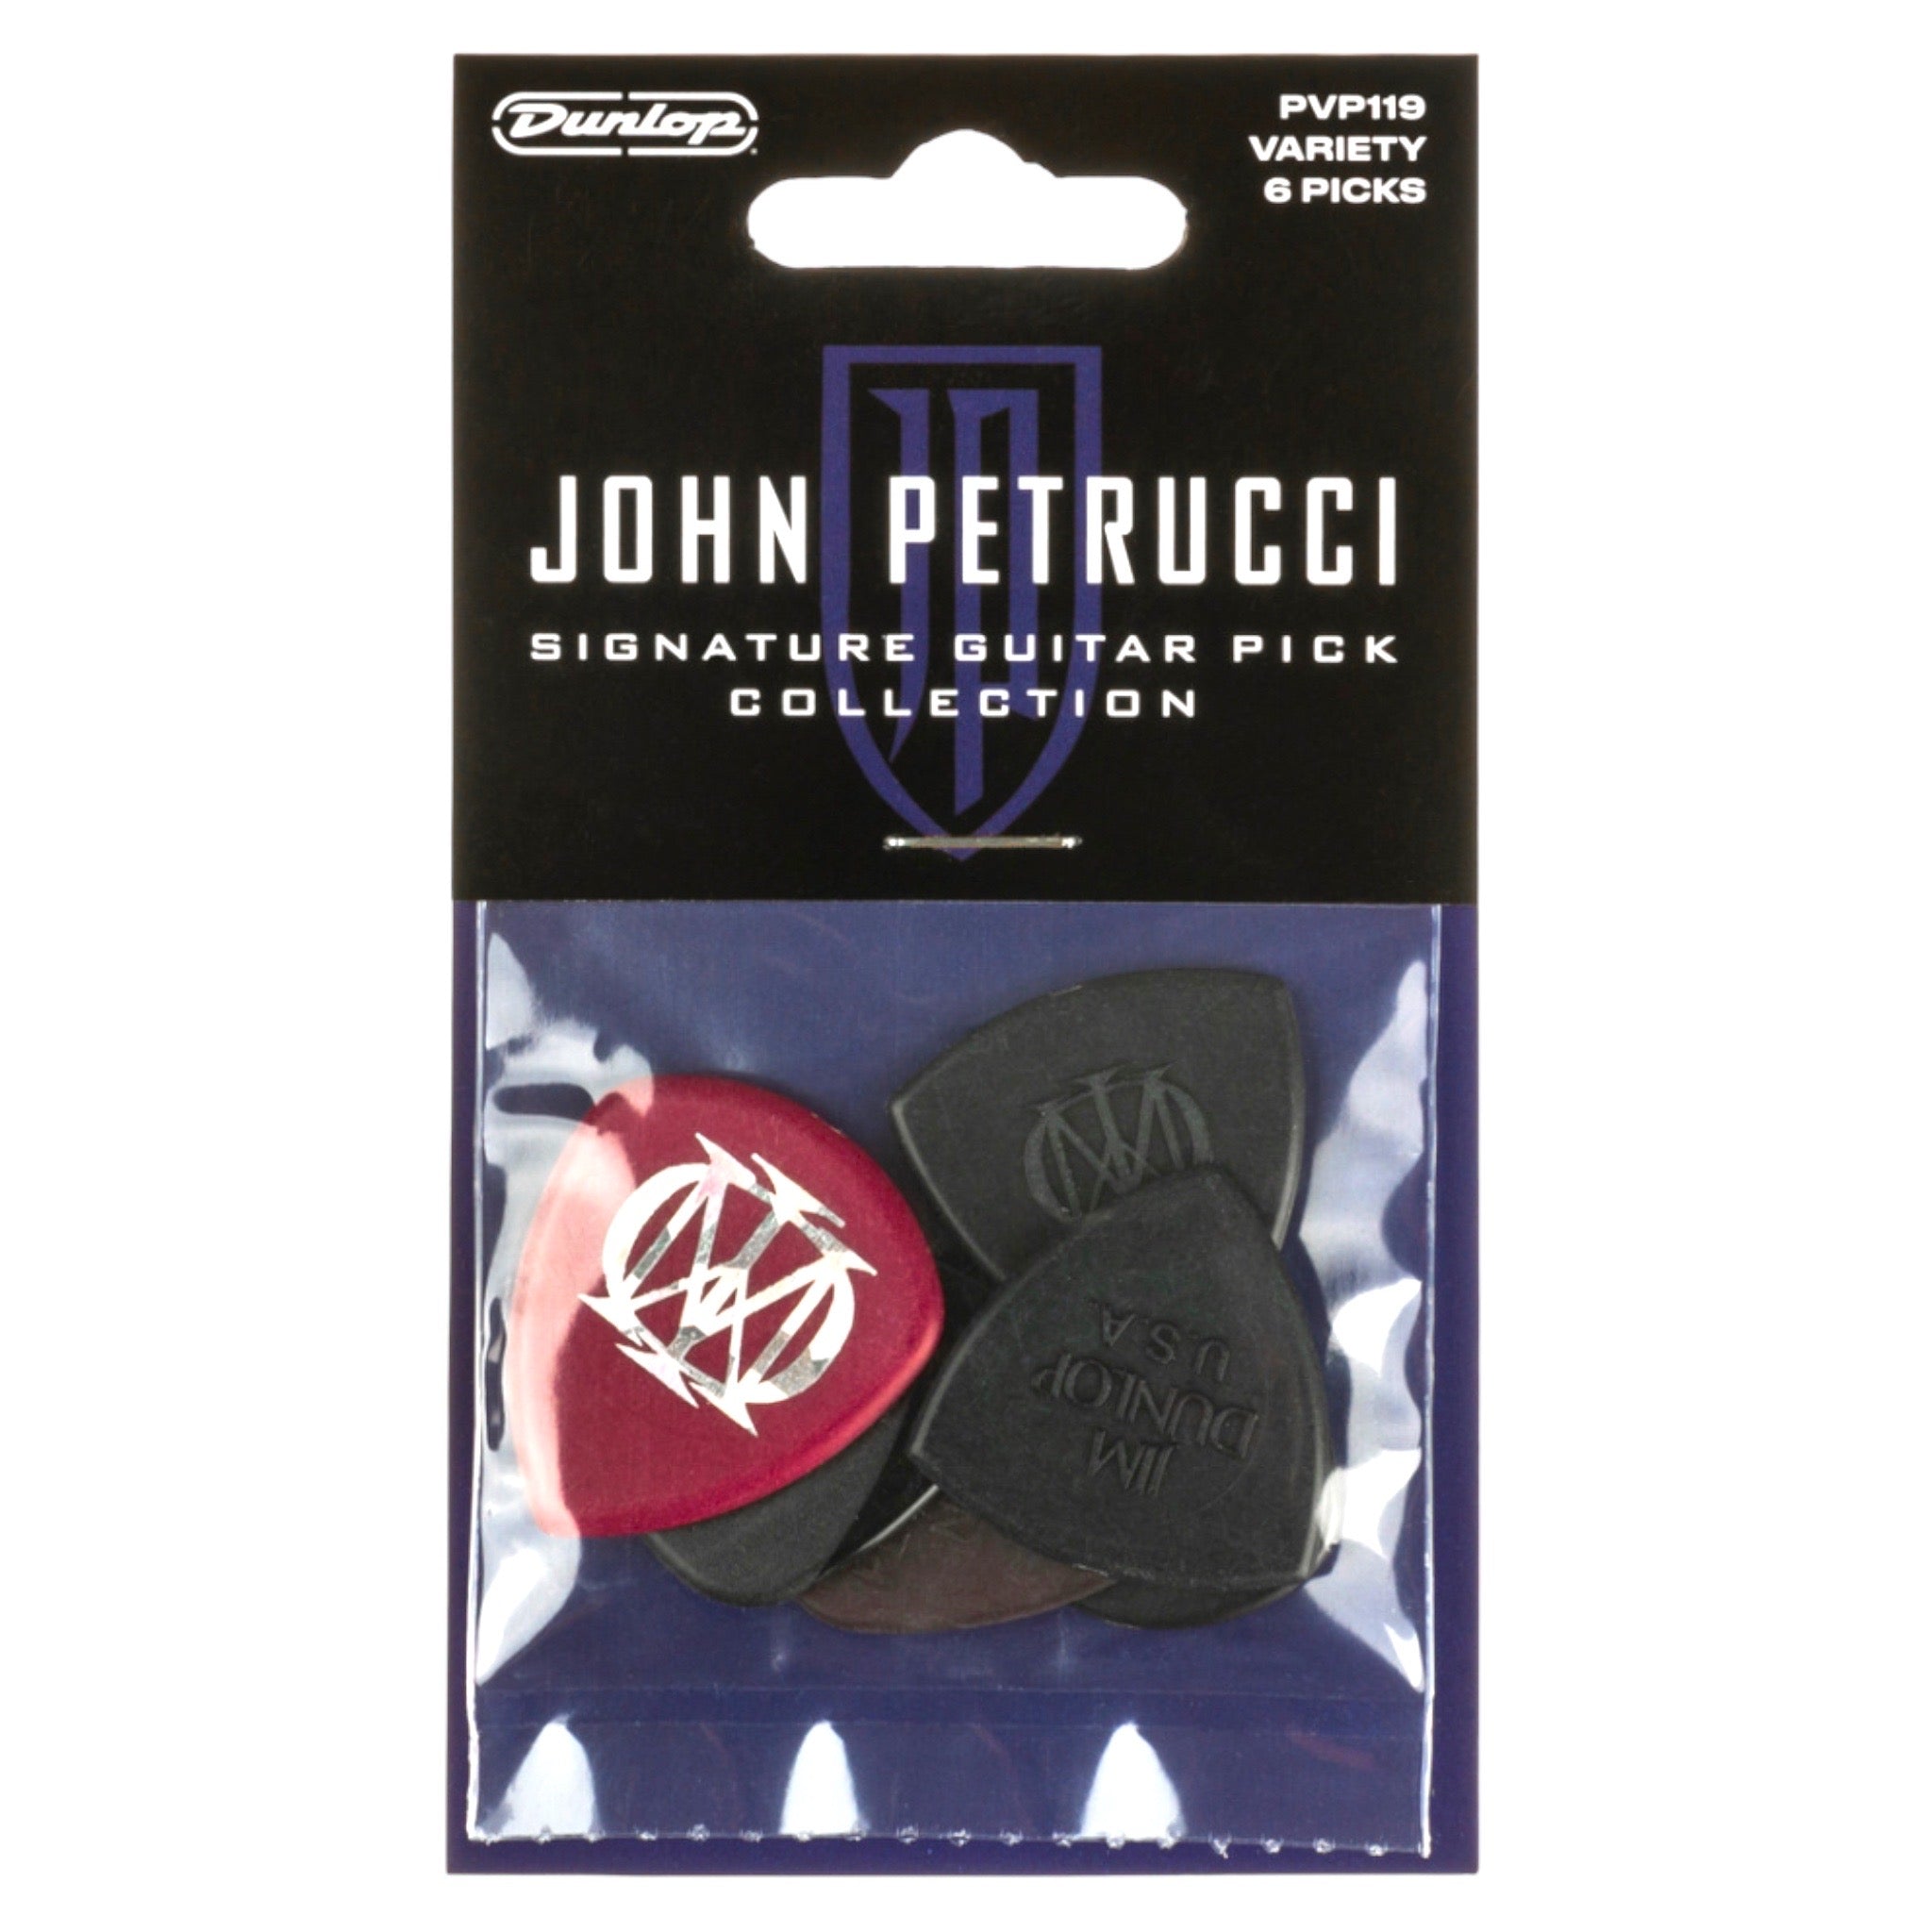 Jim Dunlop John Petrucci Variety Pack Guitar Picks (6-Pack)